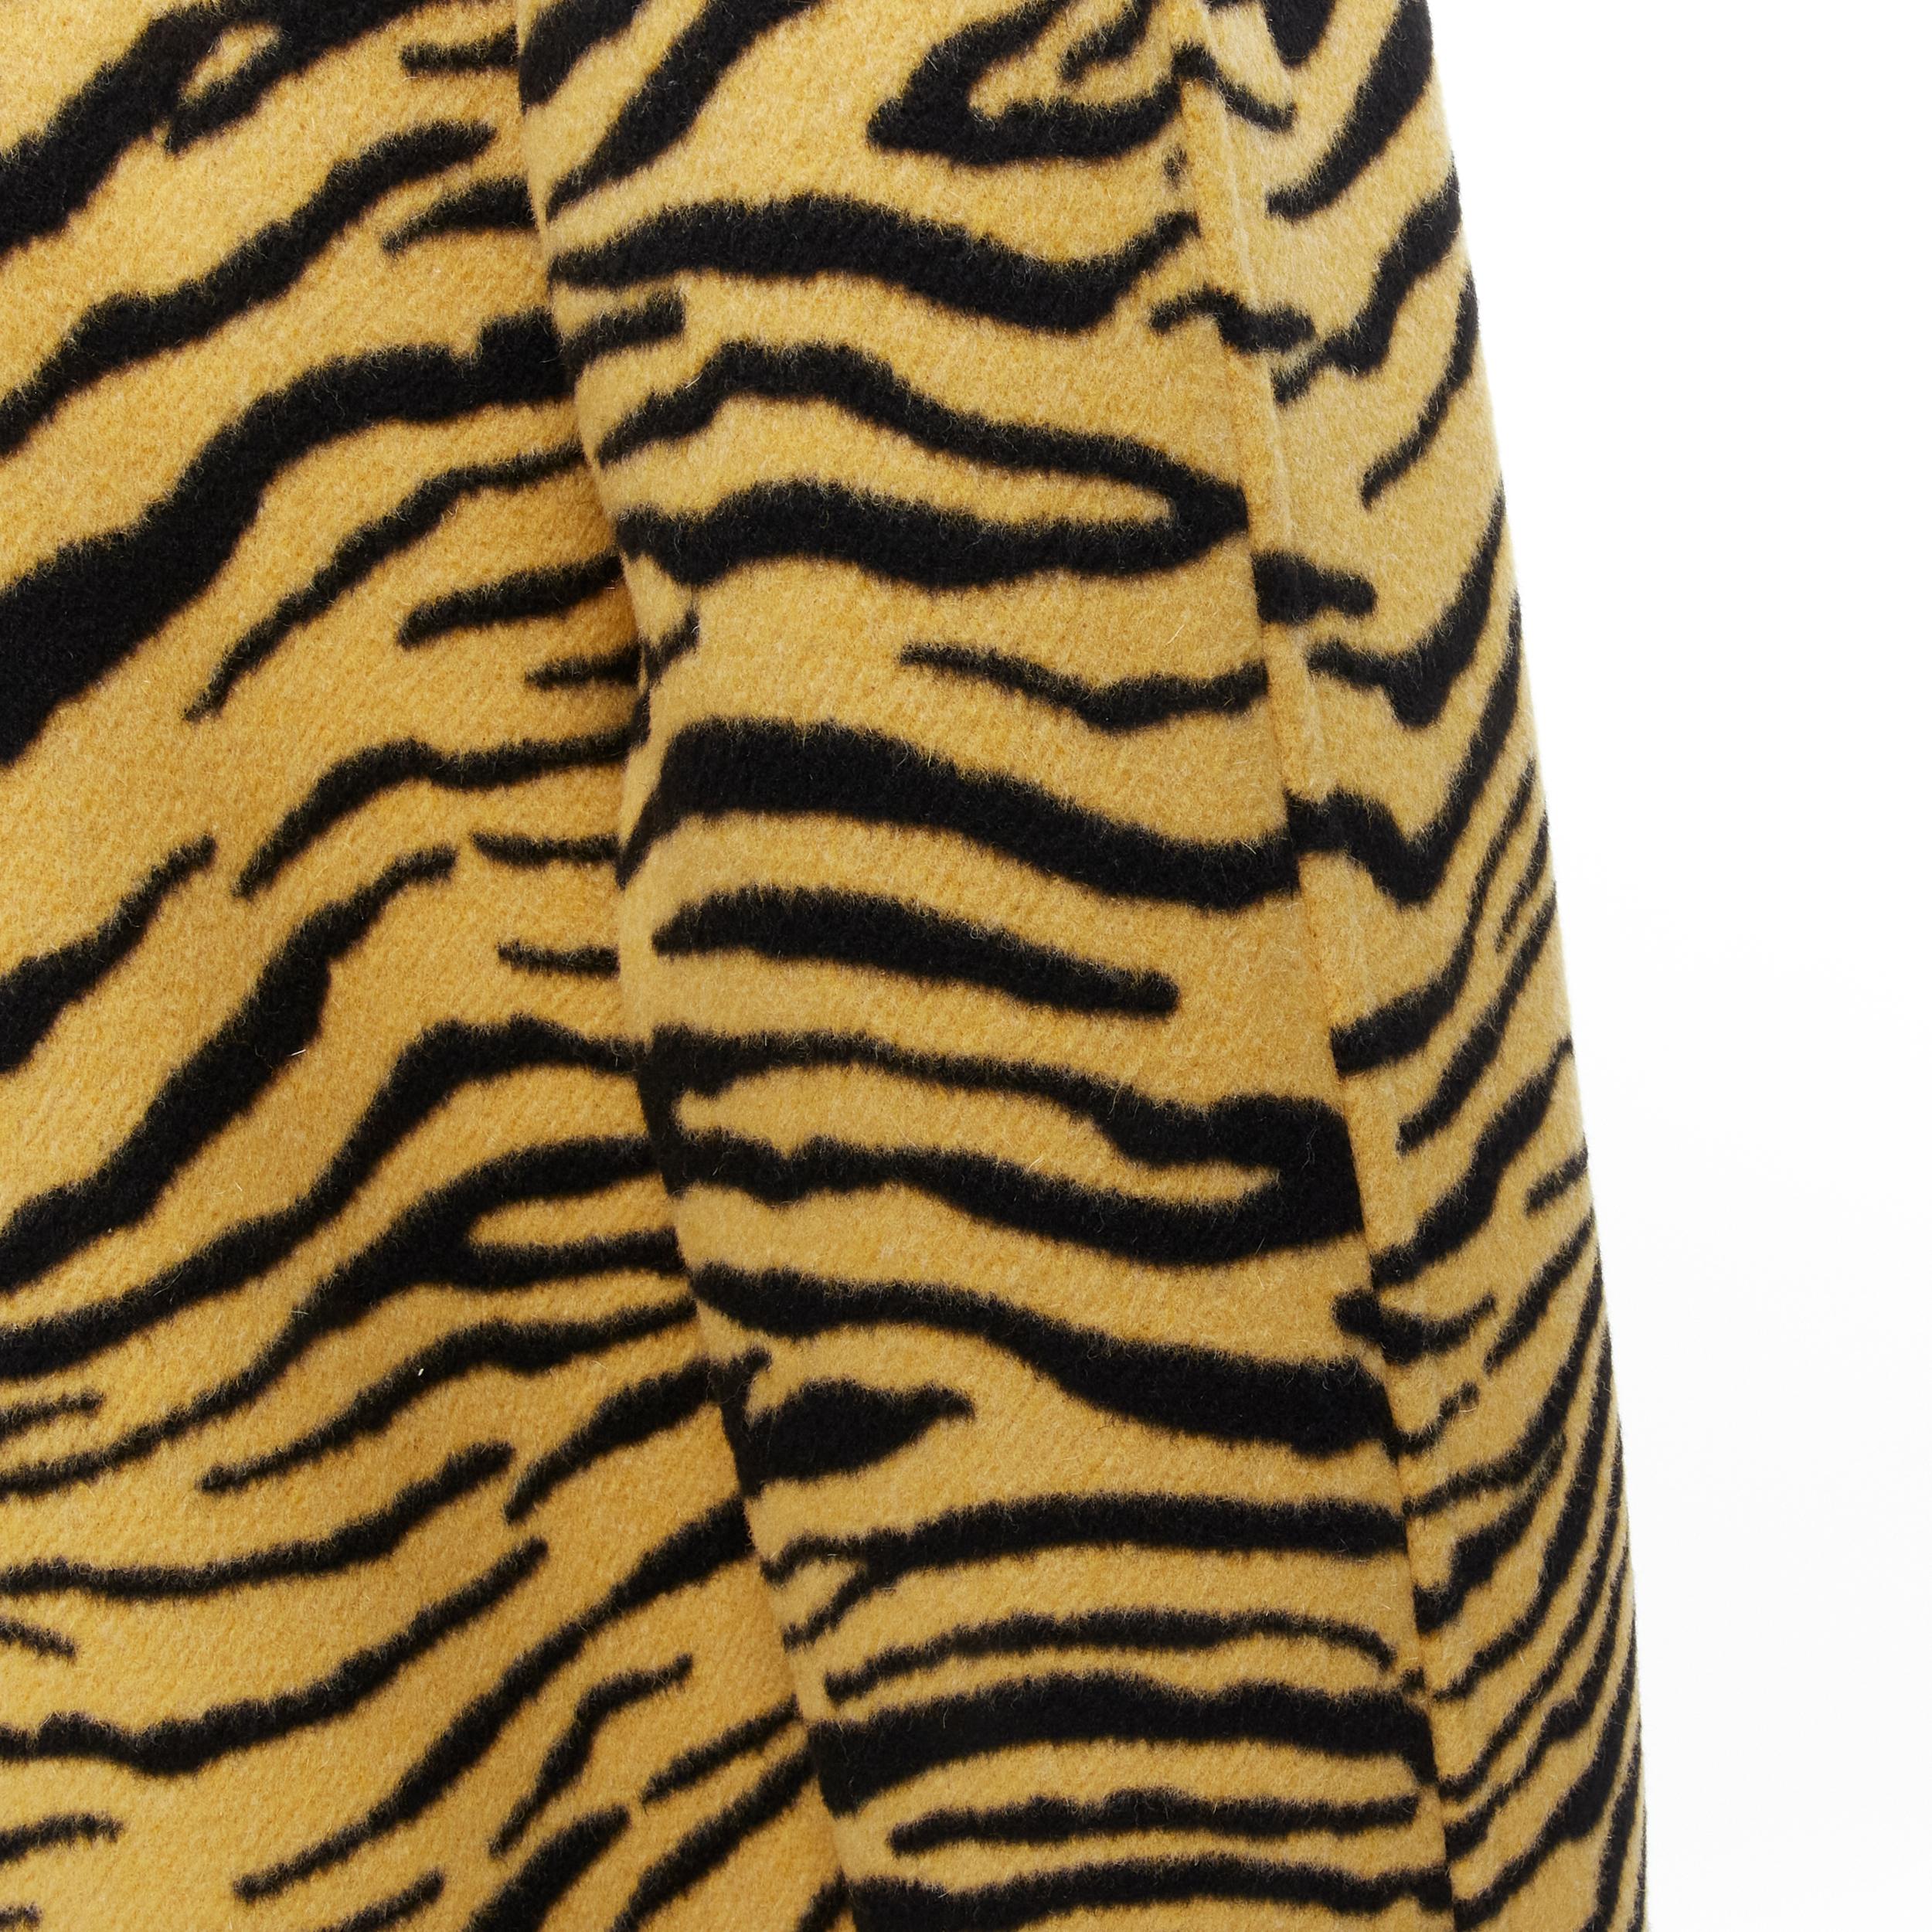 new CELINE Hedi Slimane 2019 Runway wool felt yellow black tiger coat EU48 M 4